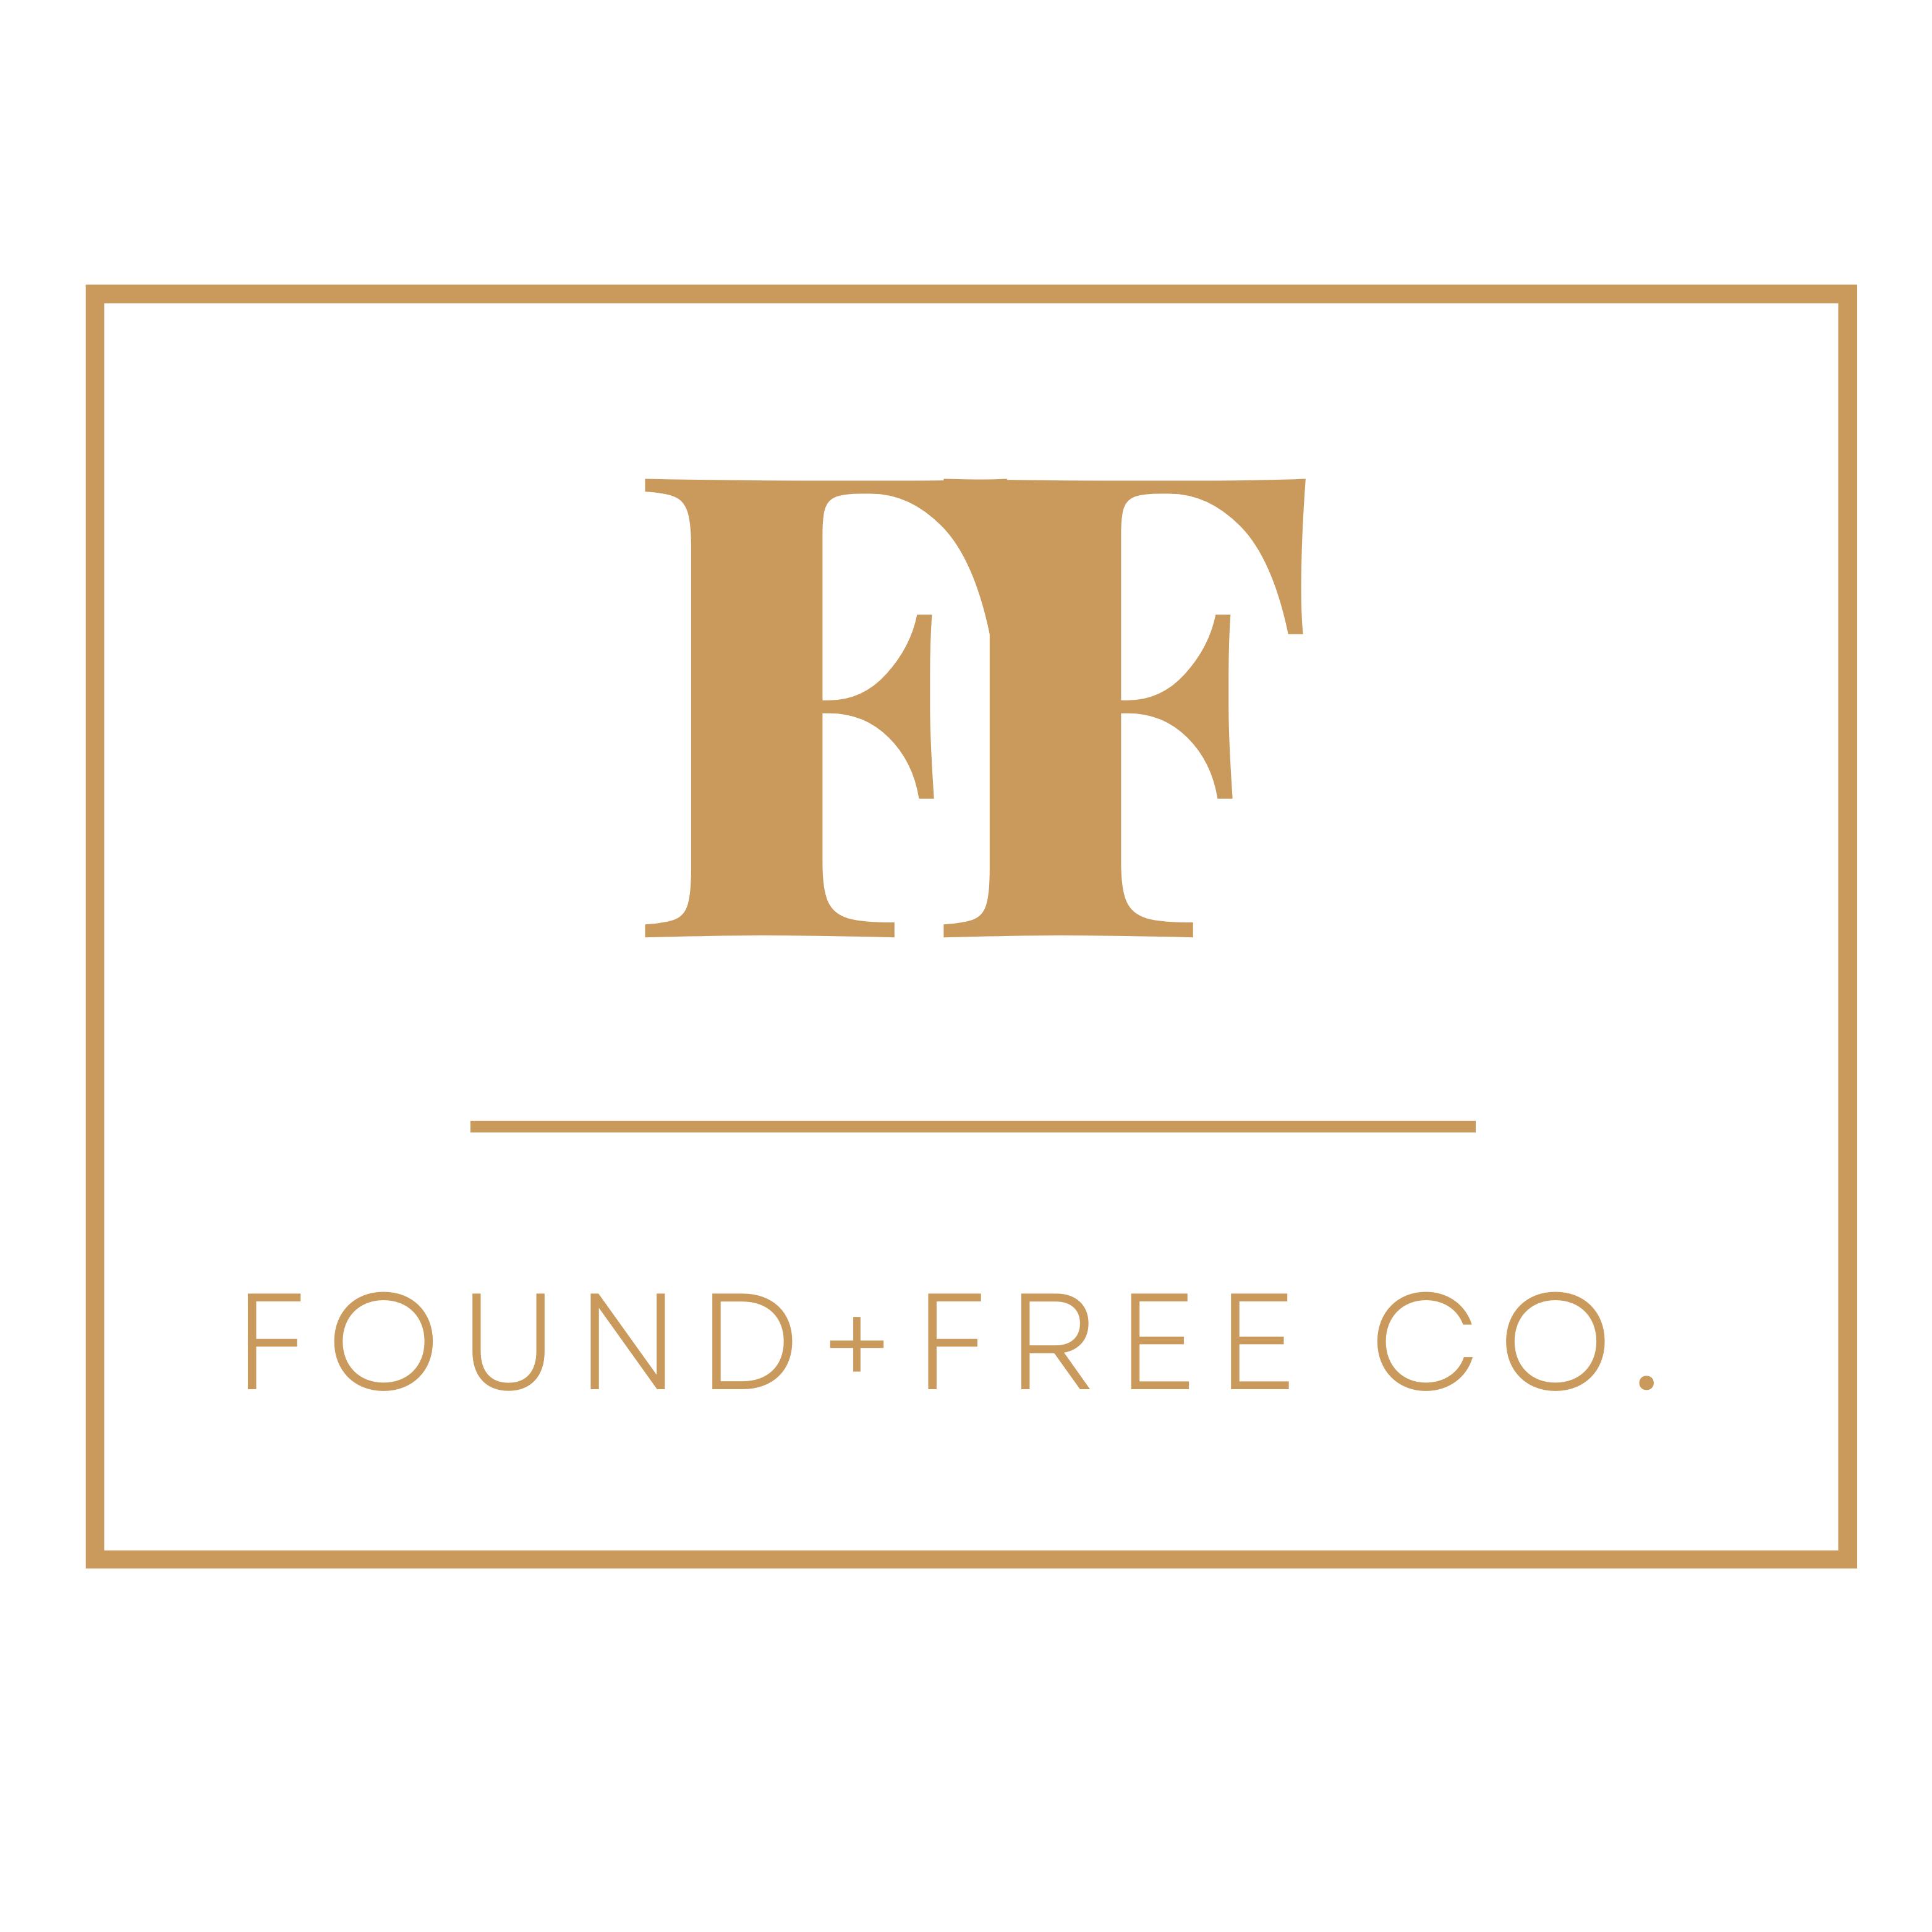 Found+Free Co.